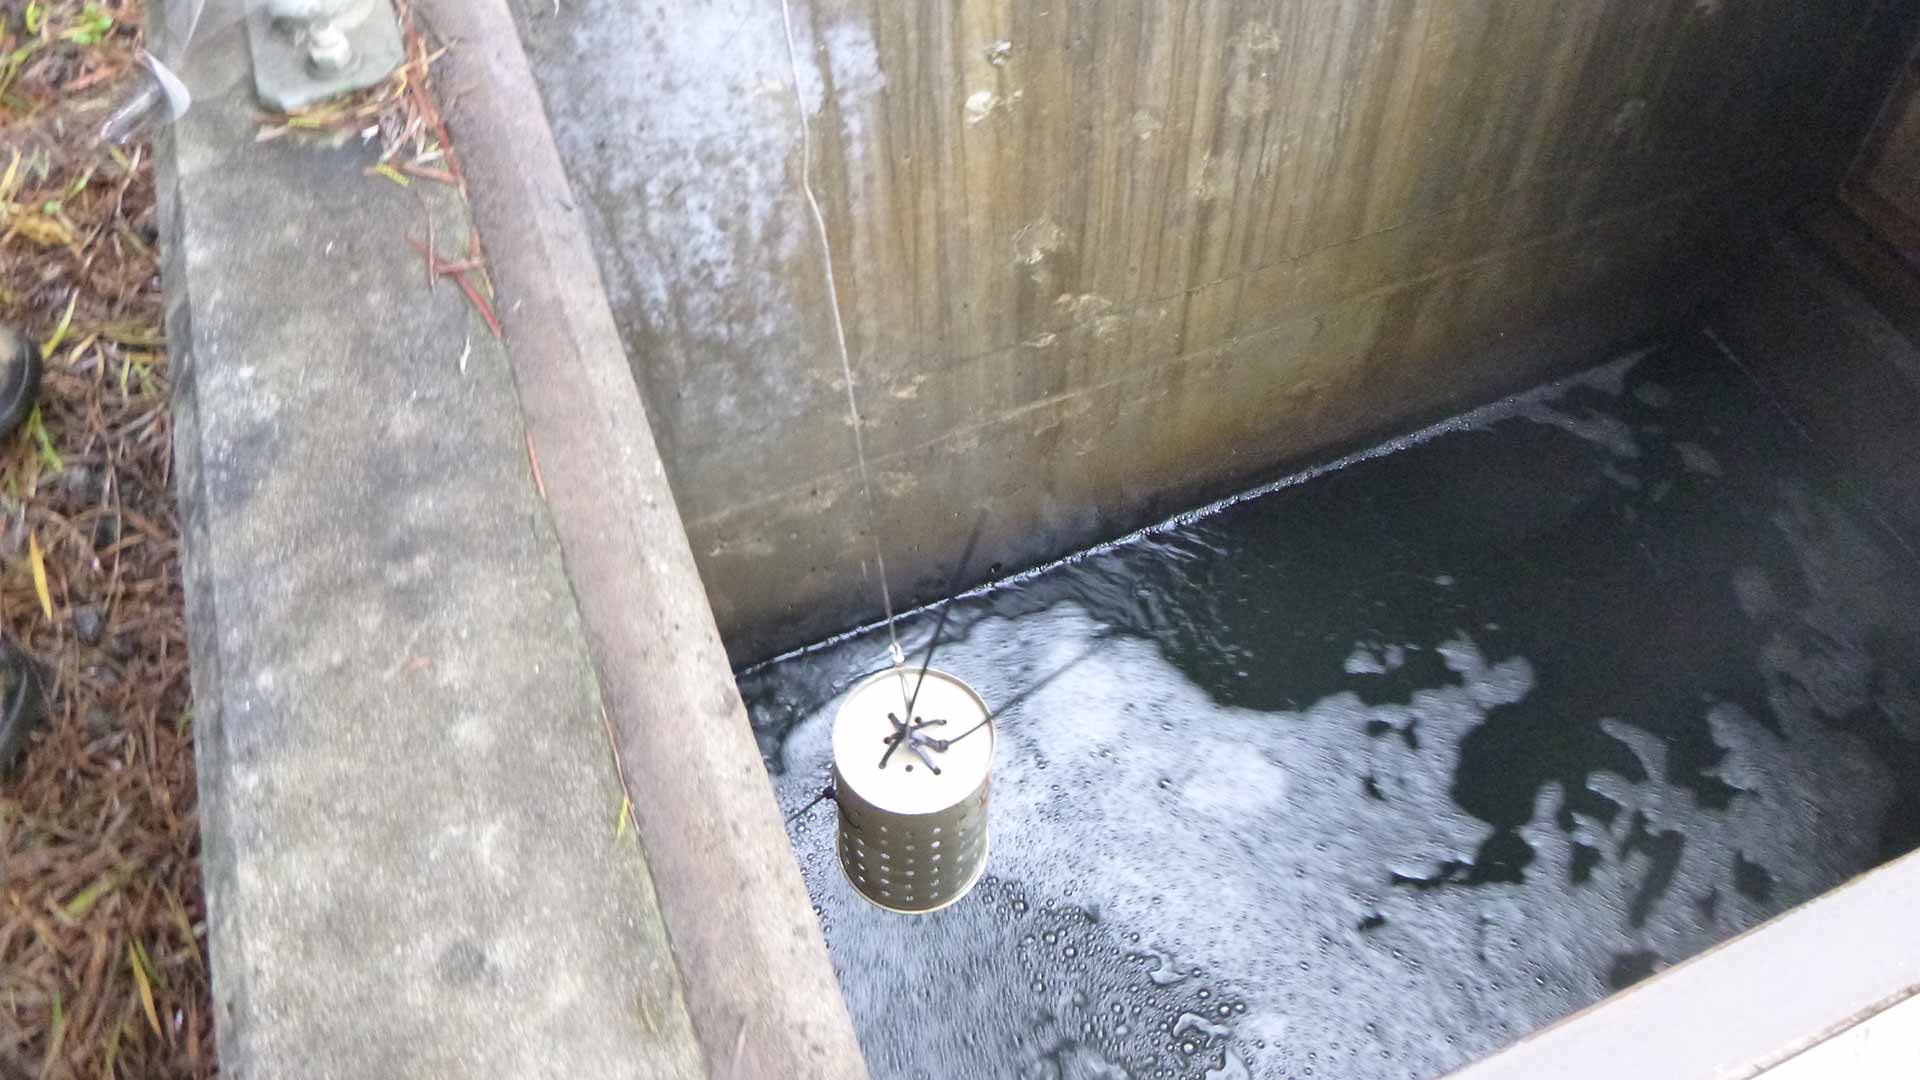 Passive Sampler deployment in an effluent pit